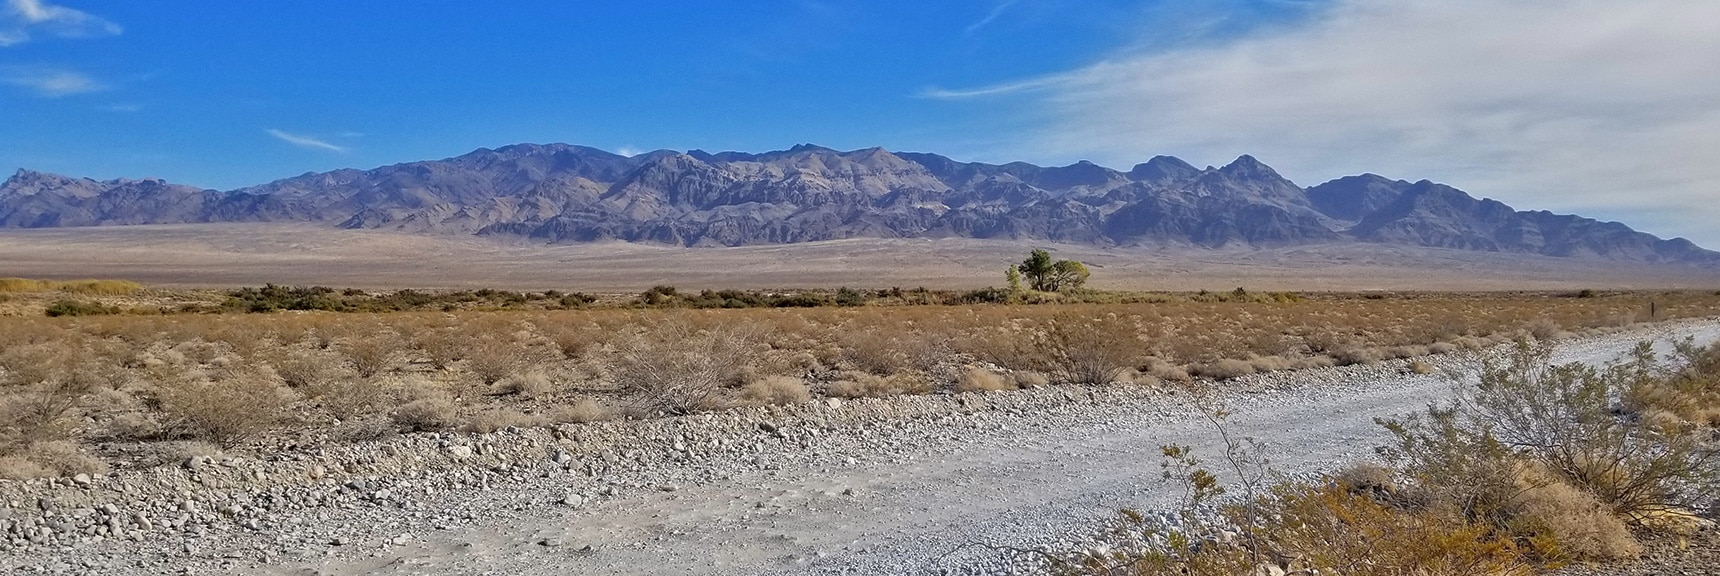 Looking Up Mormon Well Road Toward the Sheep Range | Smart Car Bike Rack and Mountain Bike Test, Sheep Range, Nevada